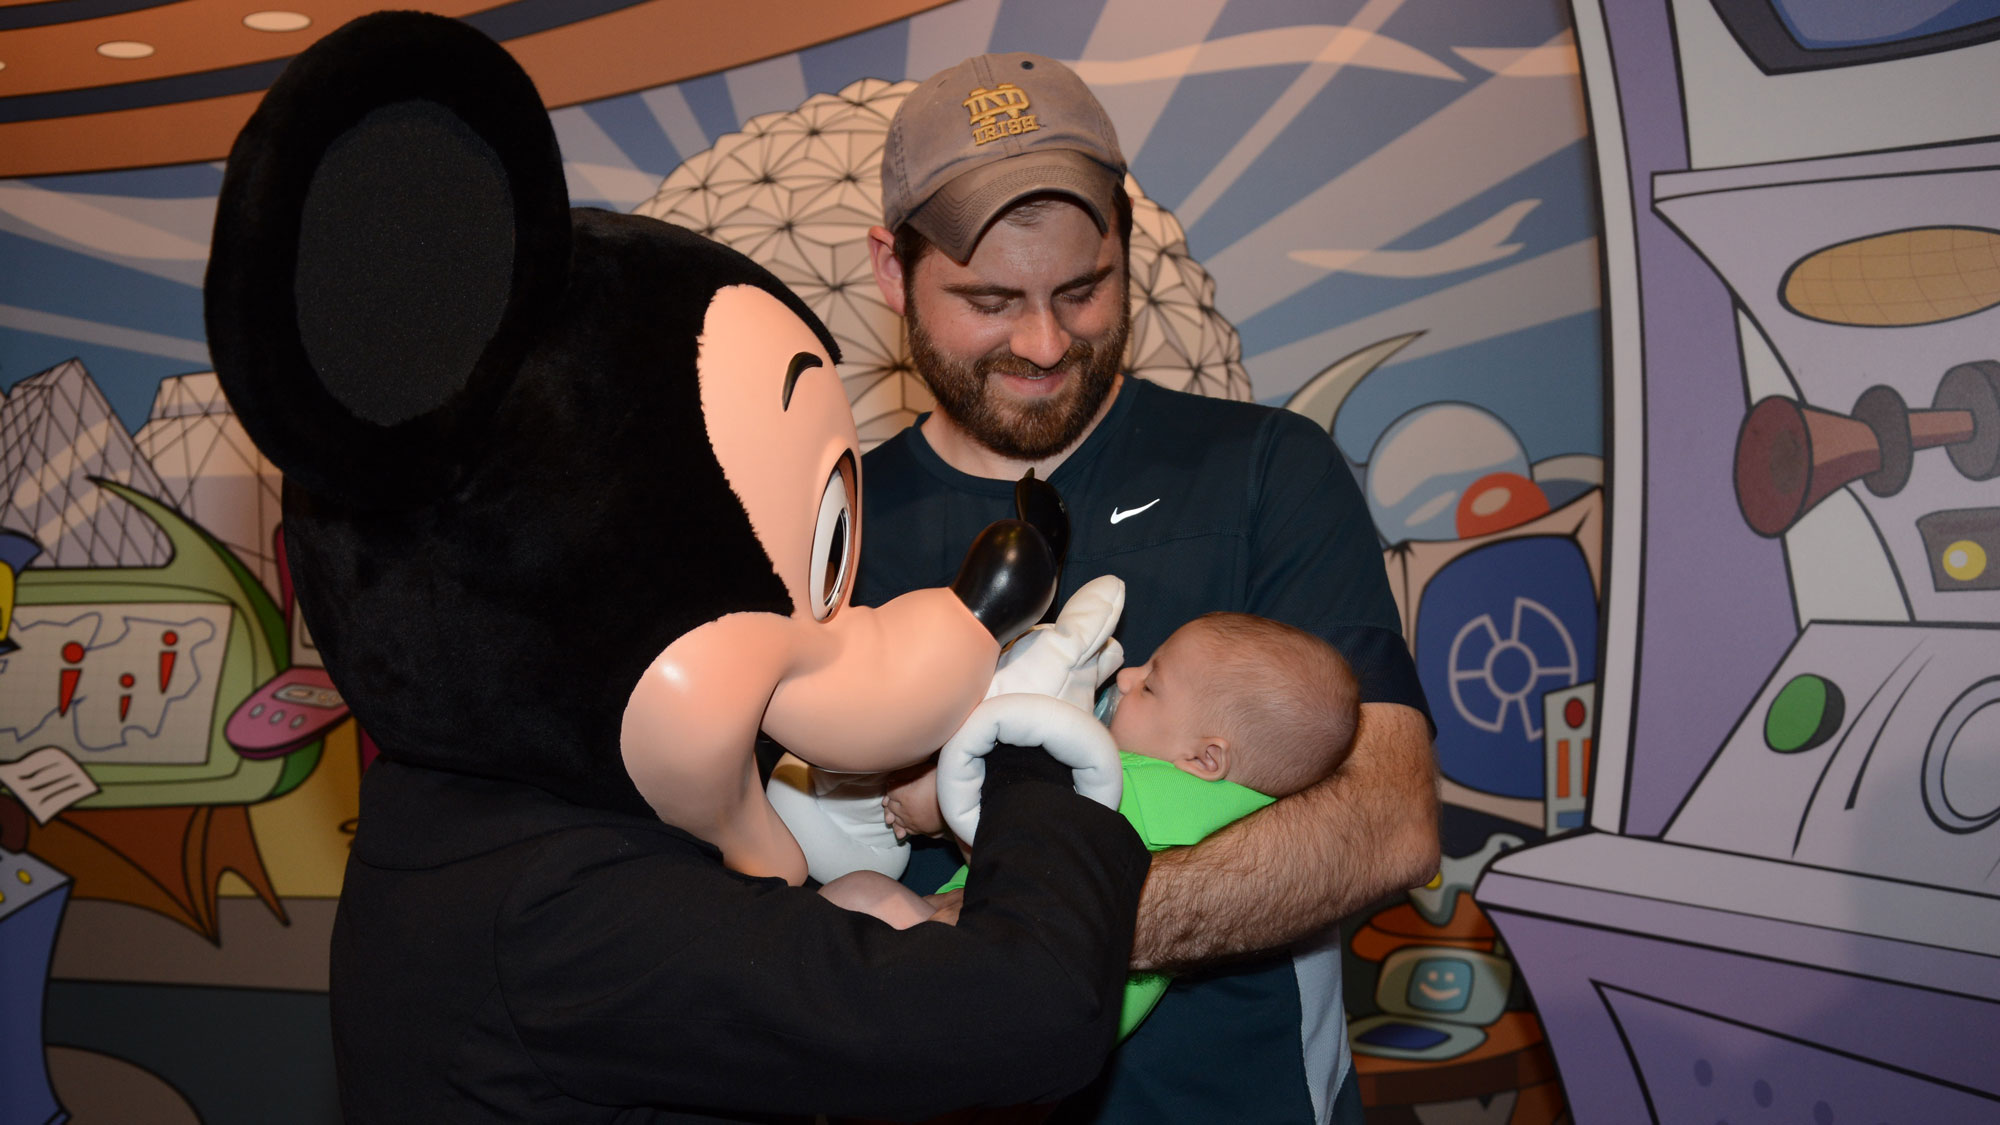 The Baby and Jordann at Walt Disney World